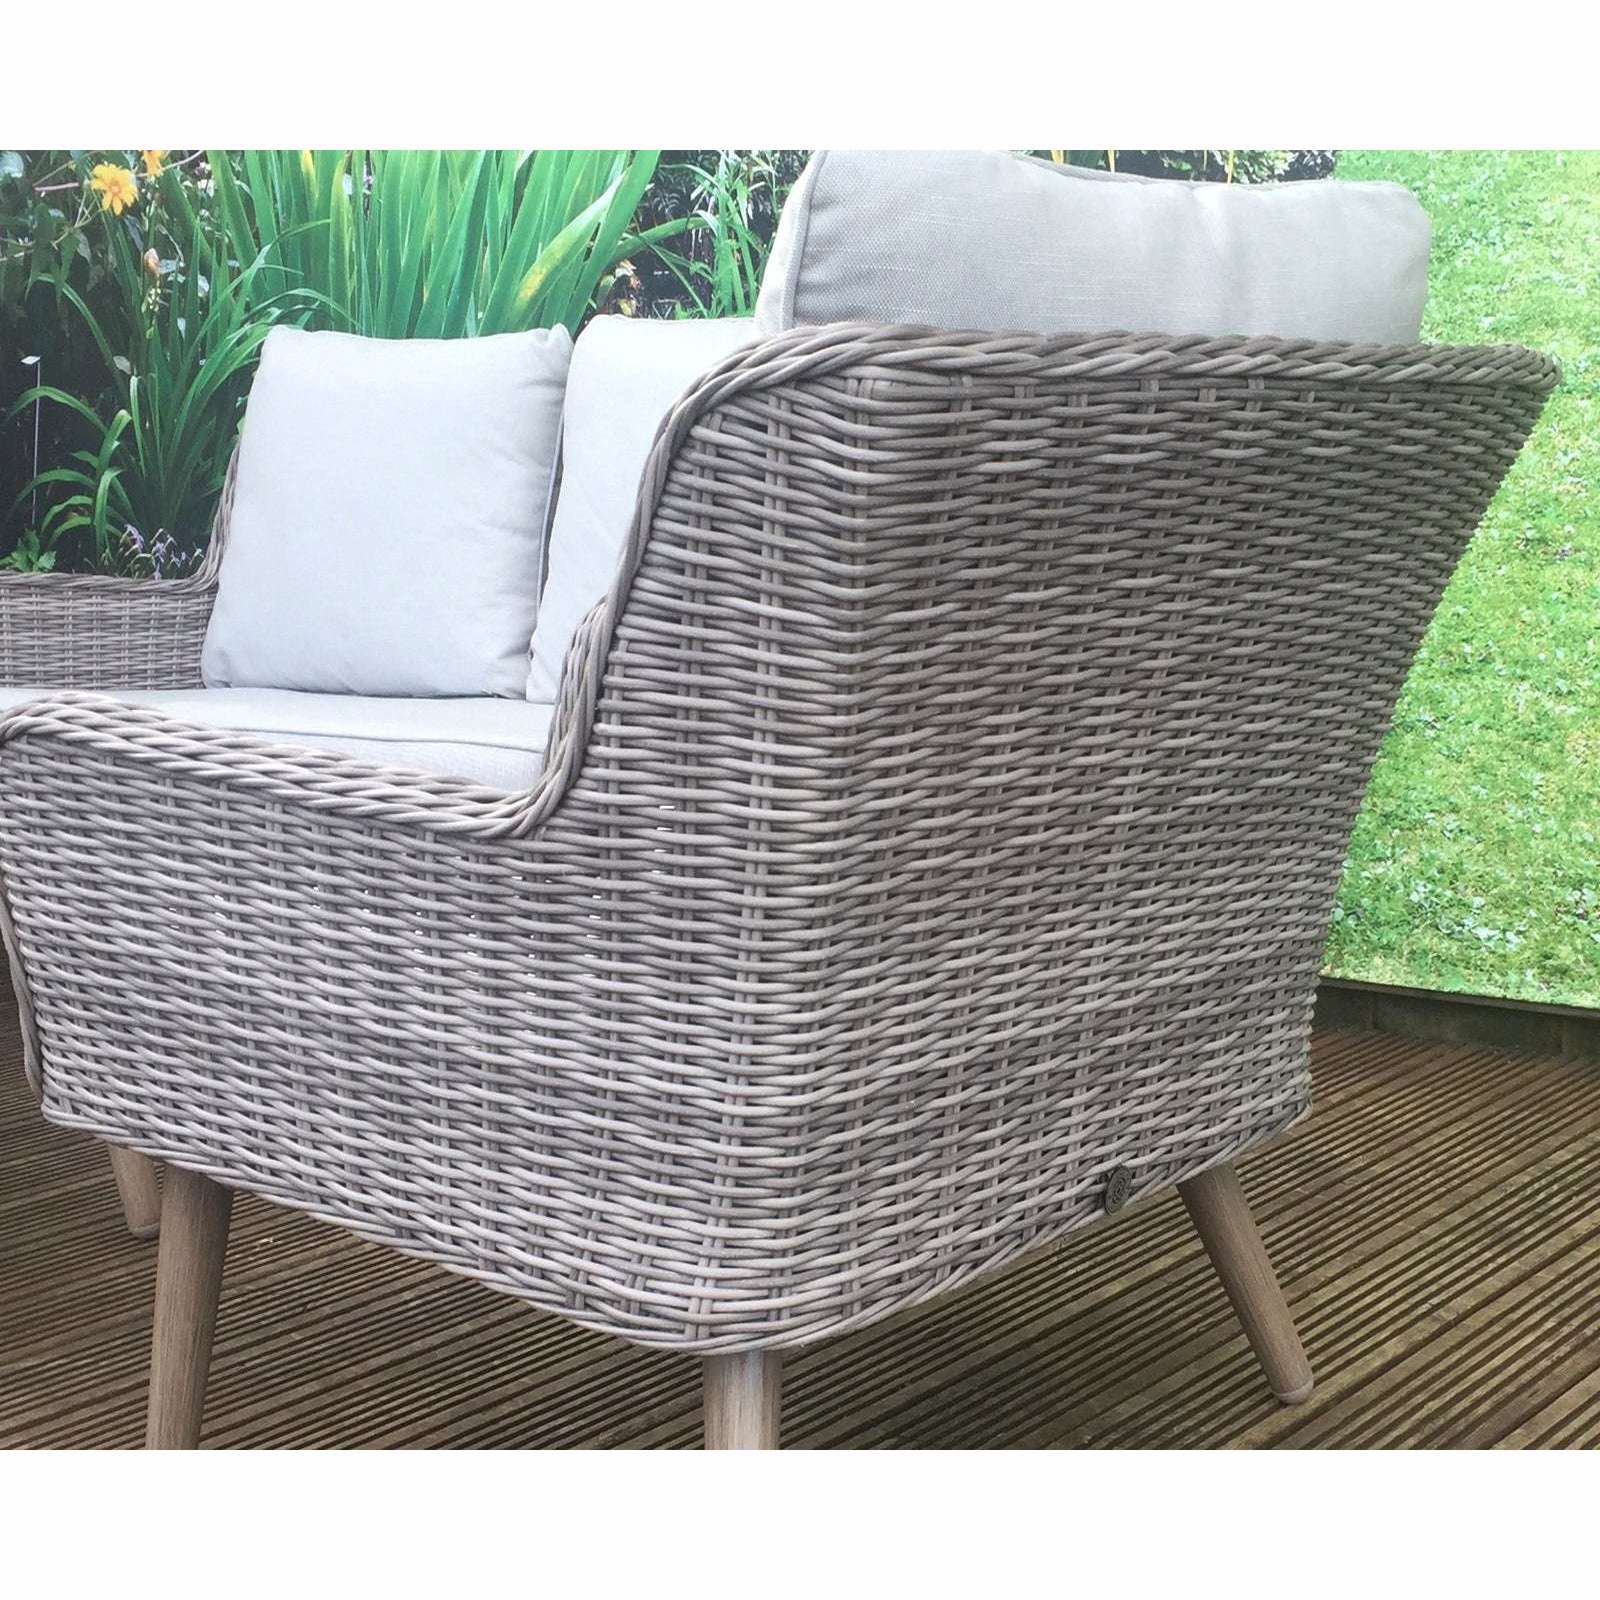 Exceptional Garden:Signature Weave Danielle 4-Seater Sofa Set